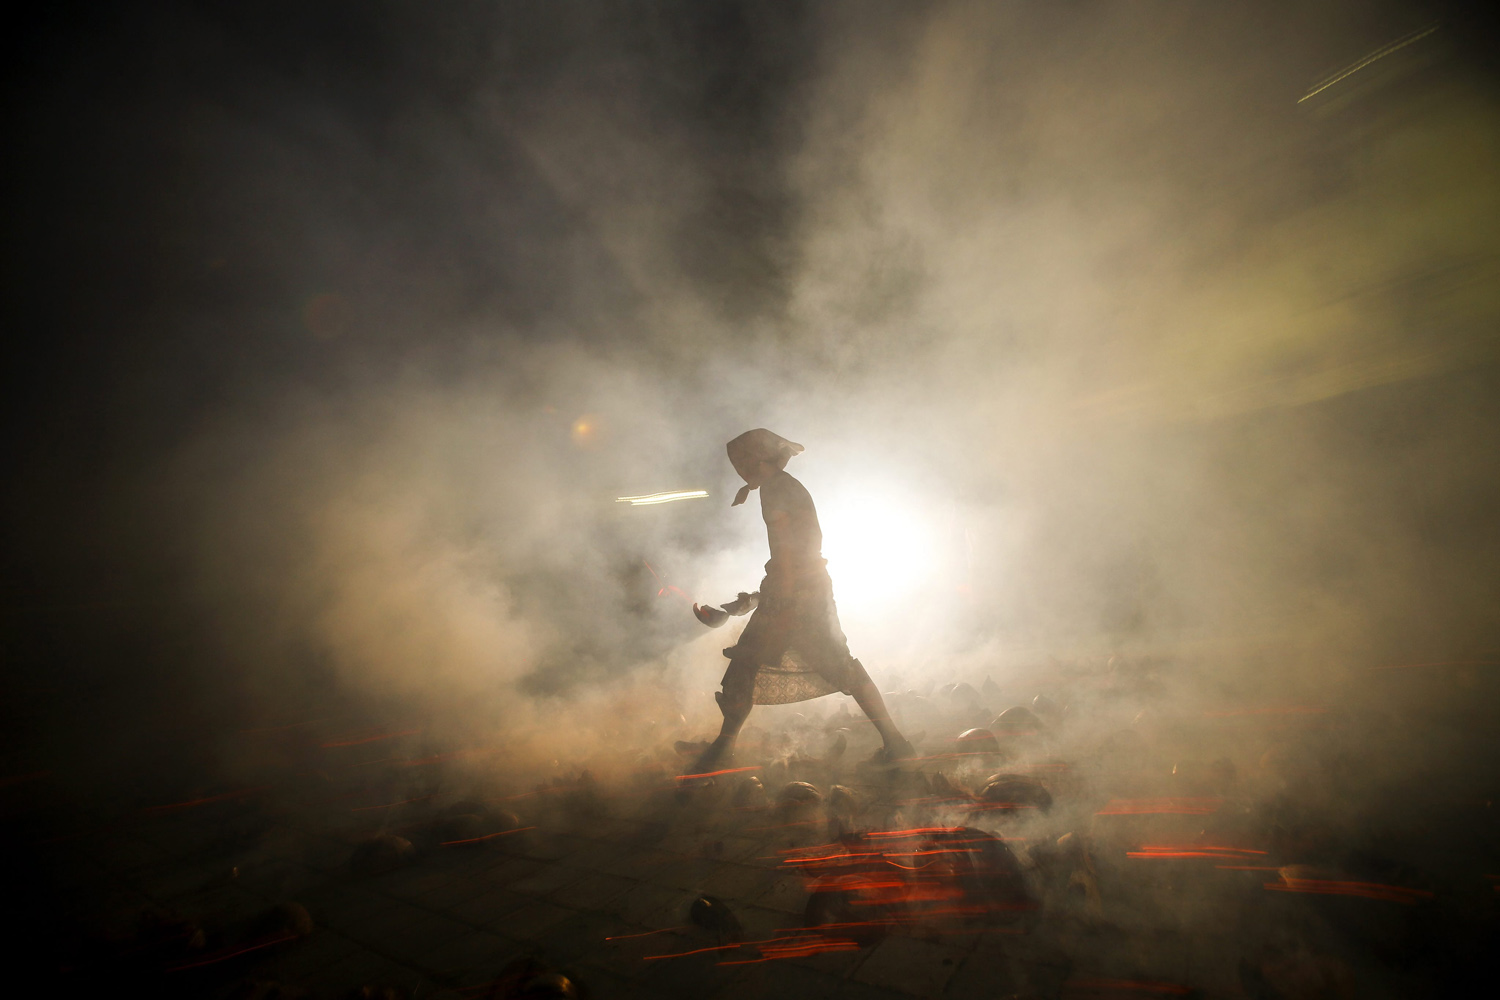 Fire fight ritual in Bali